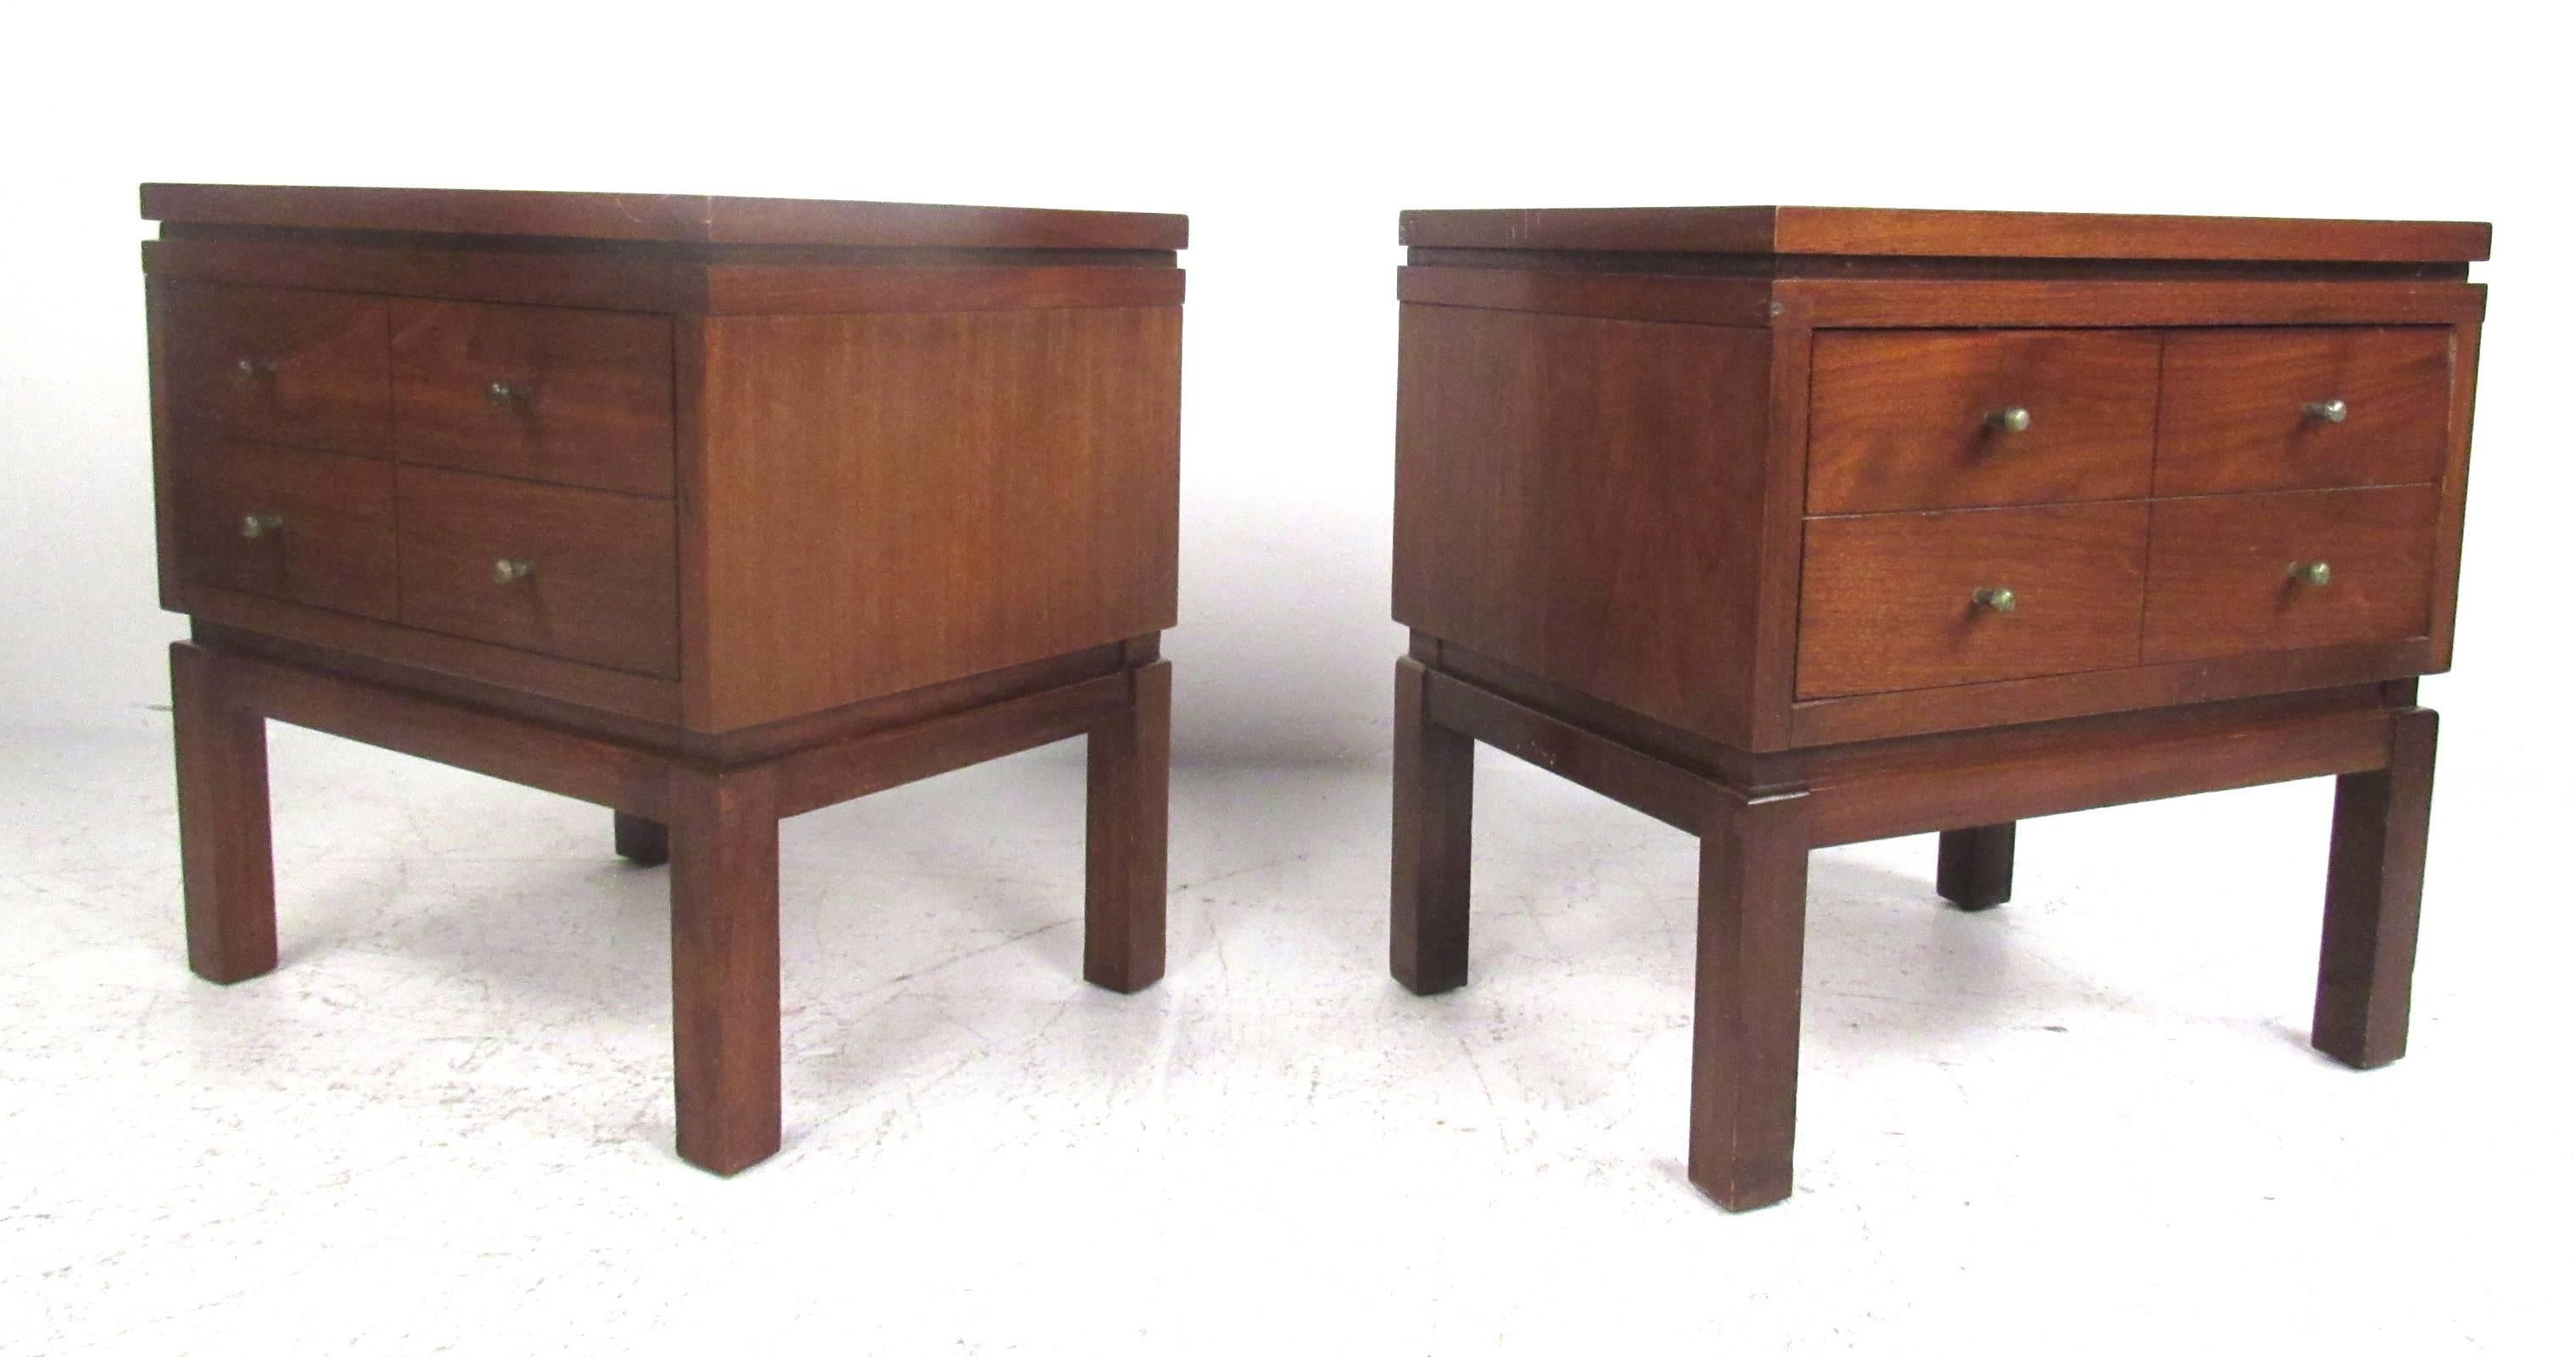 Single drawer Mid-Century walnut nightstands by Ramseur Furniture Co.